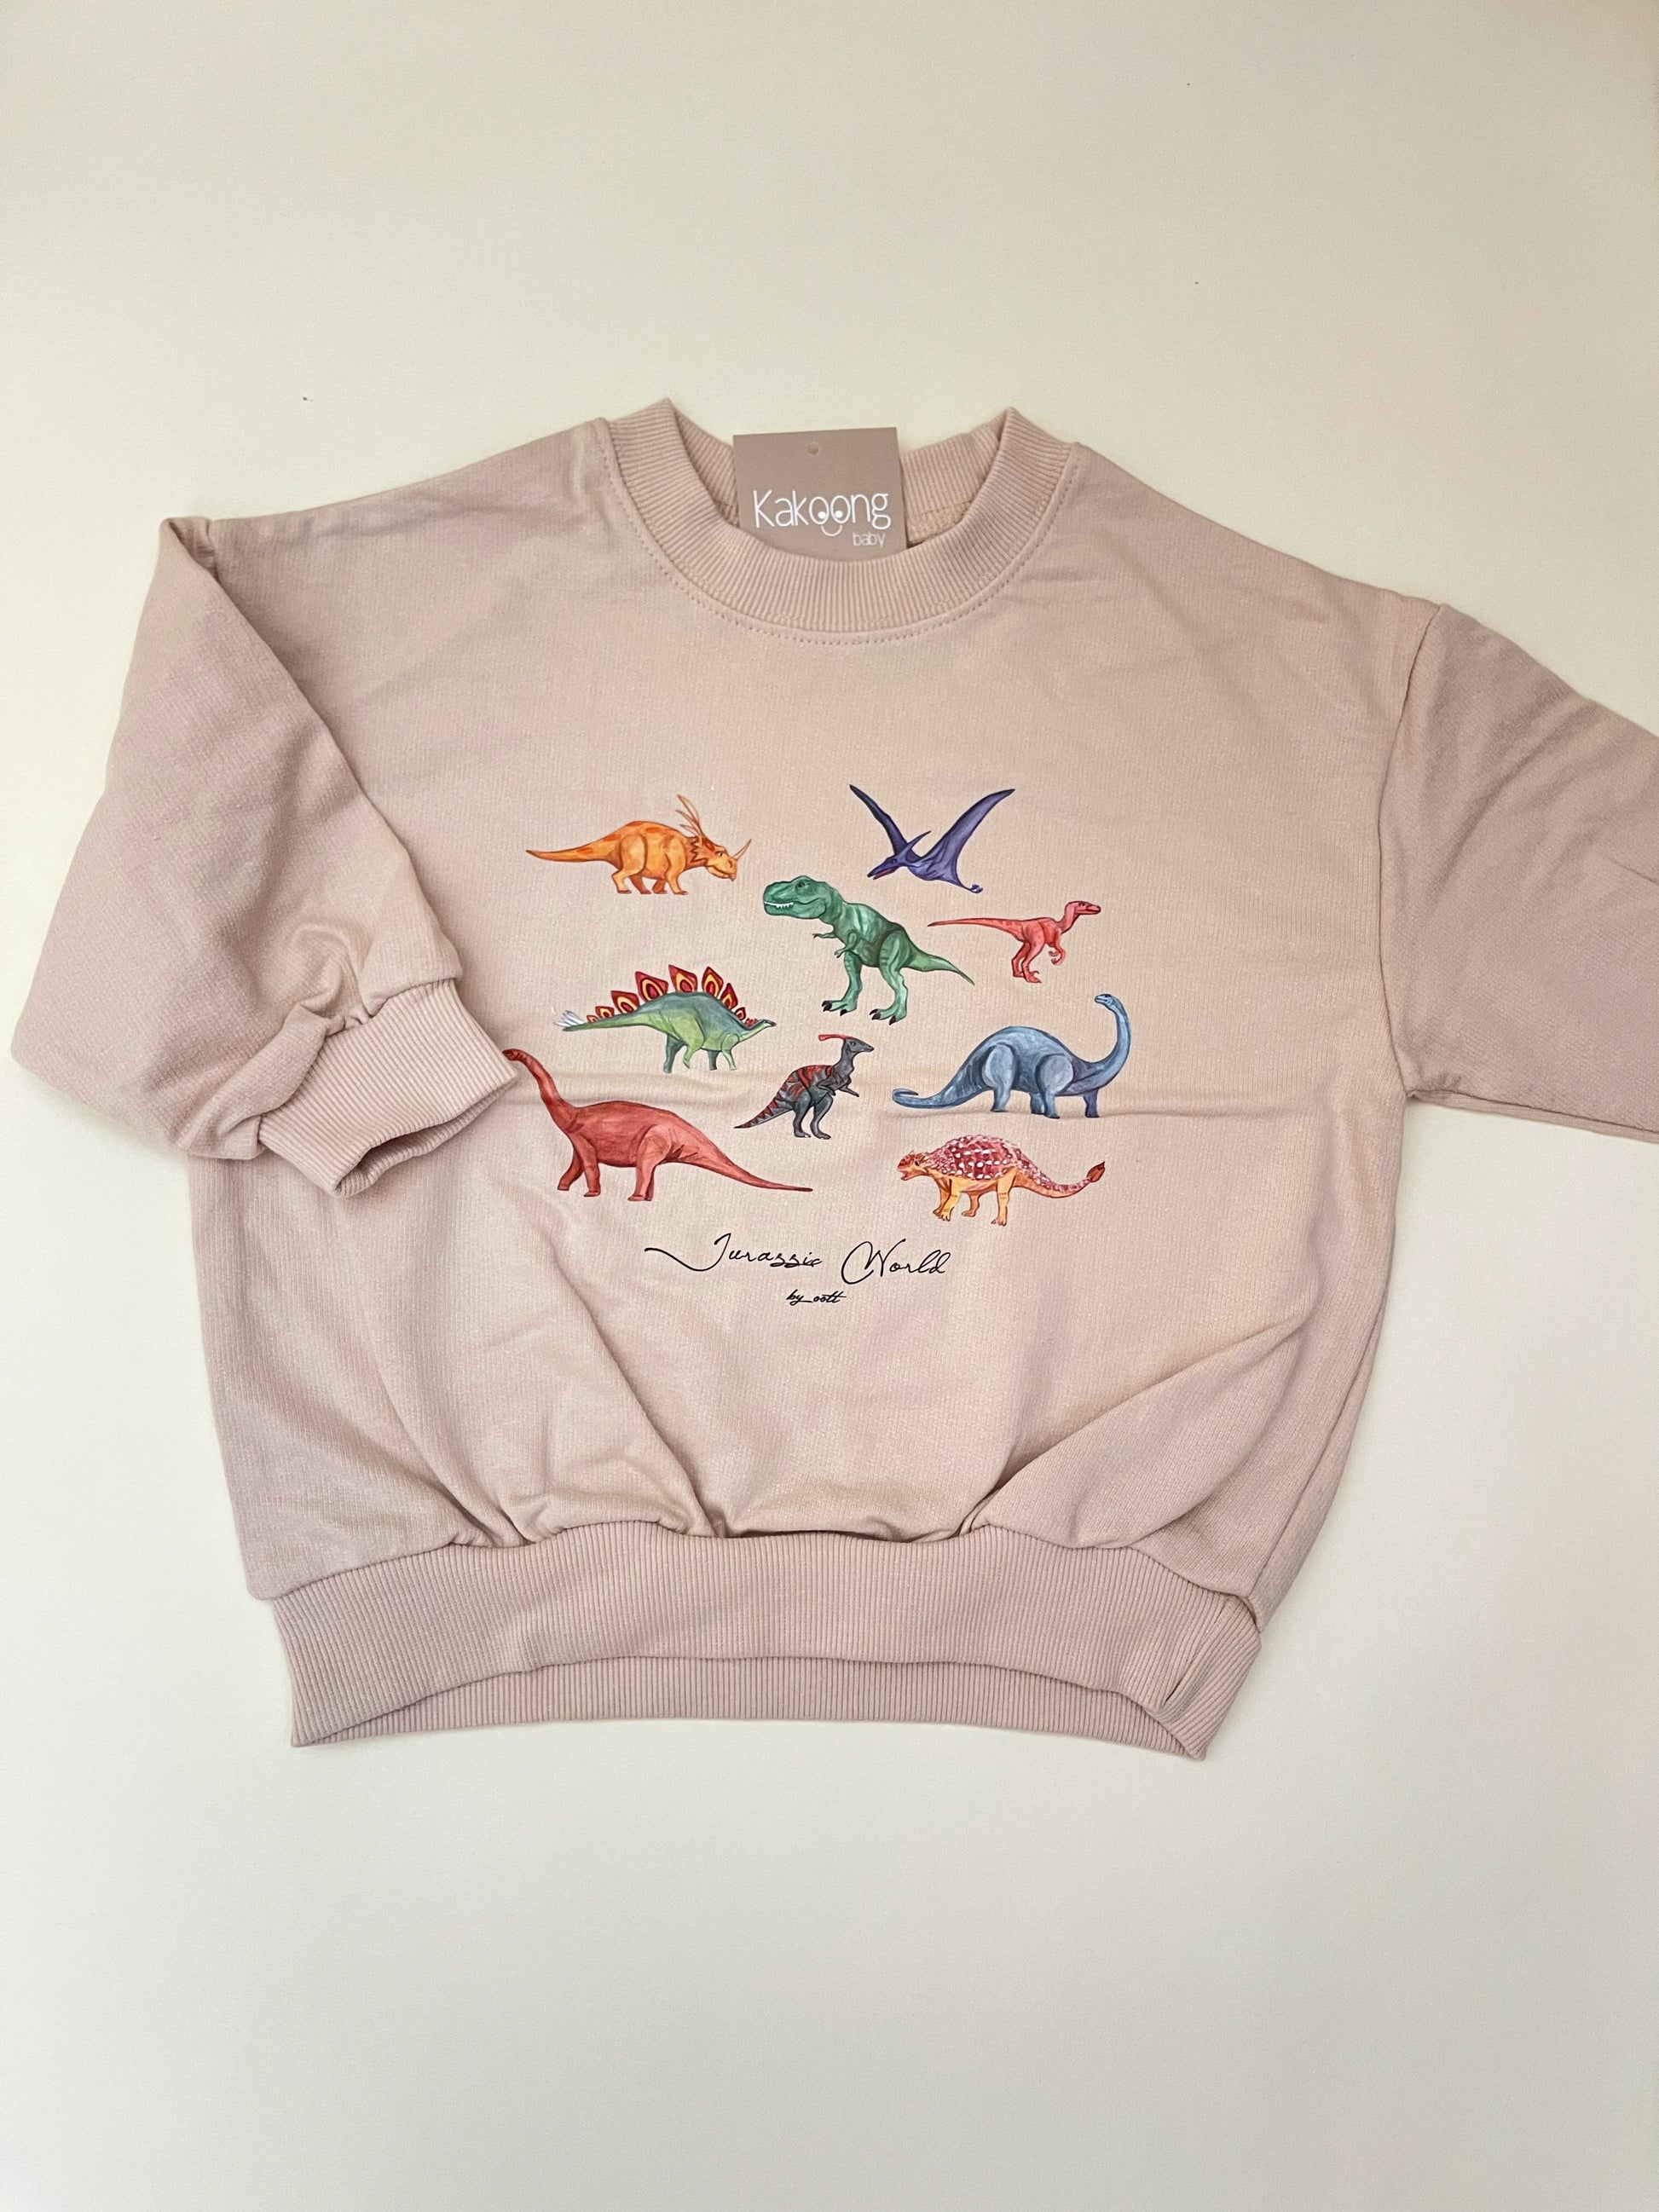 kakoongbaby – Sweatshirt Dinosaur